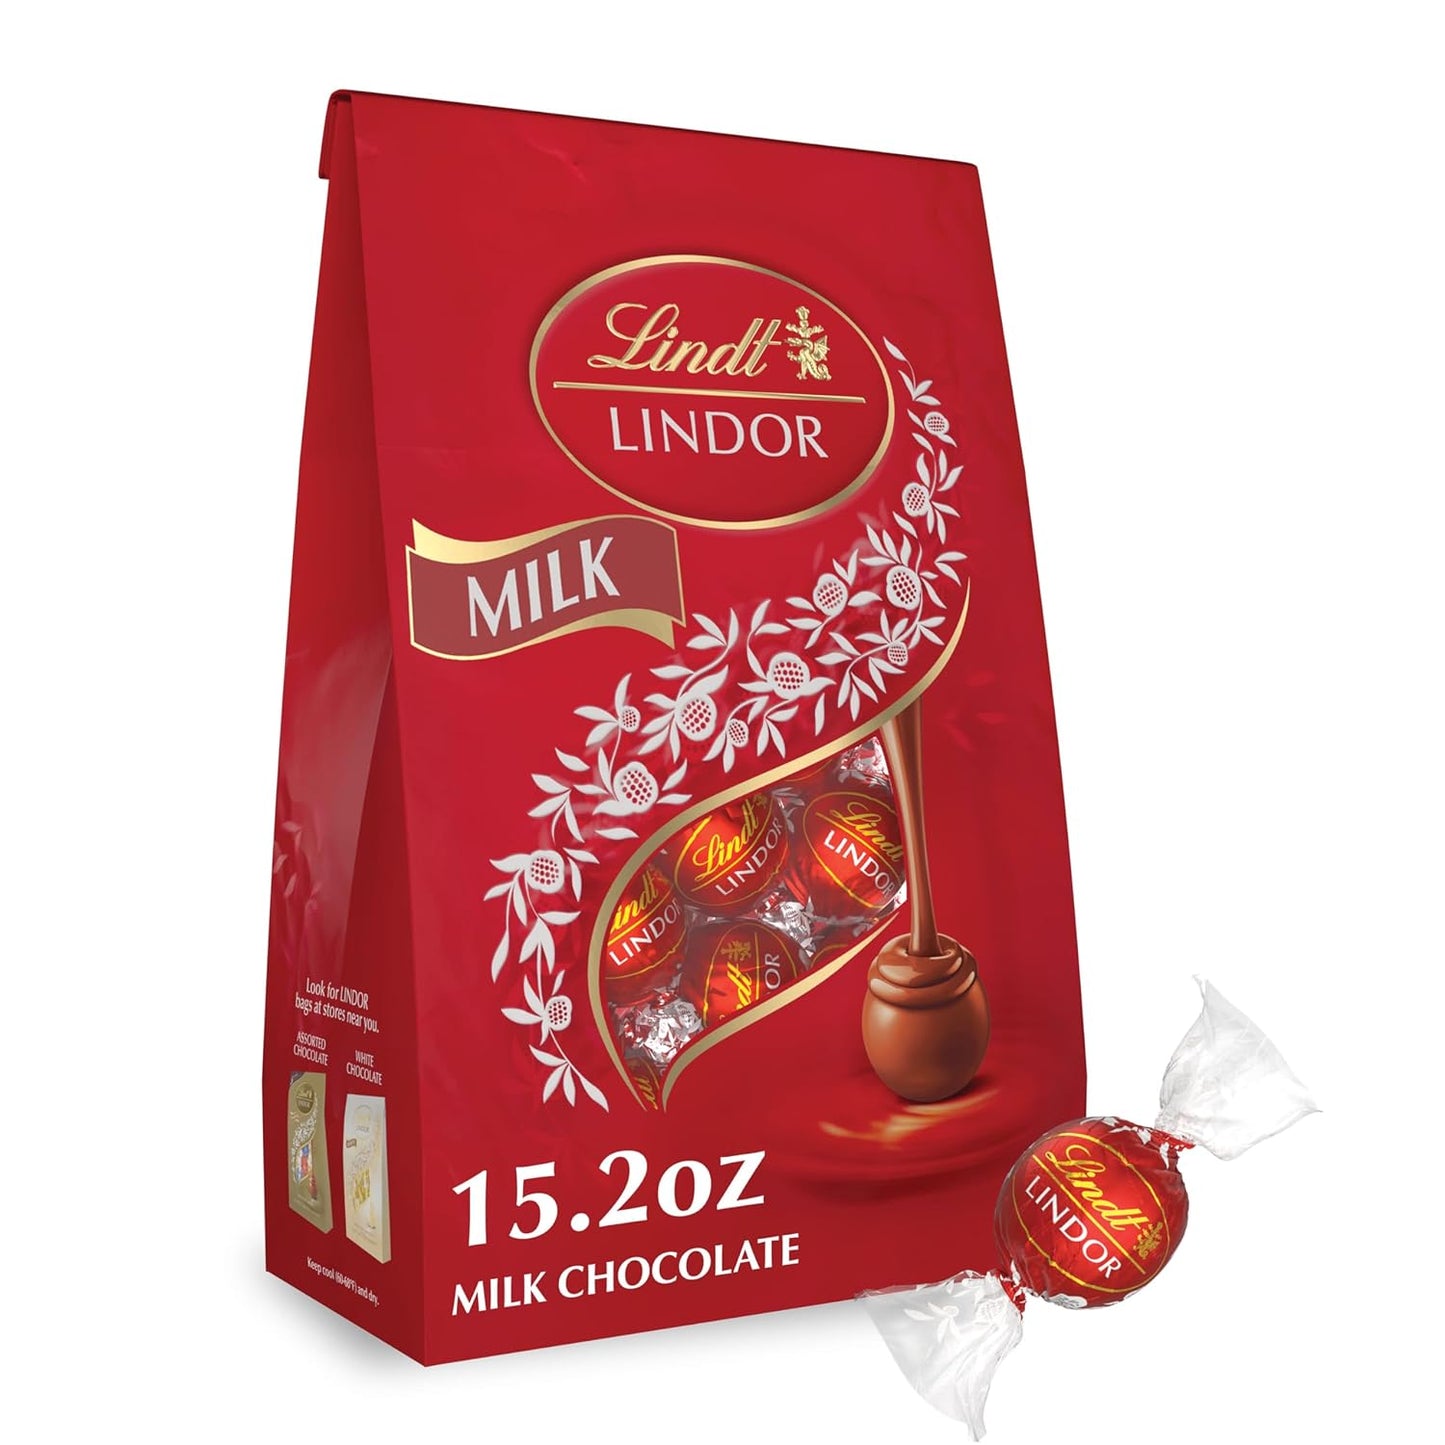 Lindt LINDOR Milk Chocolate Candy Truffles, Easter Chocolate, 15.2 oz. Bag